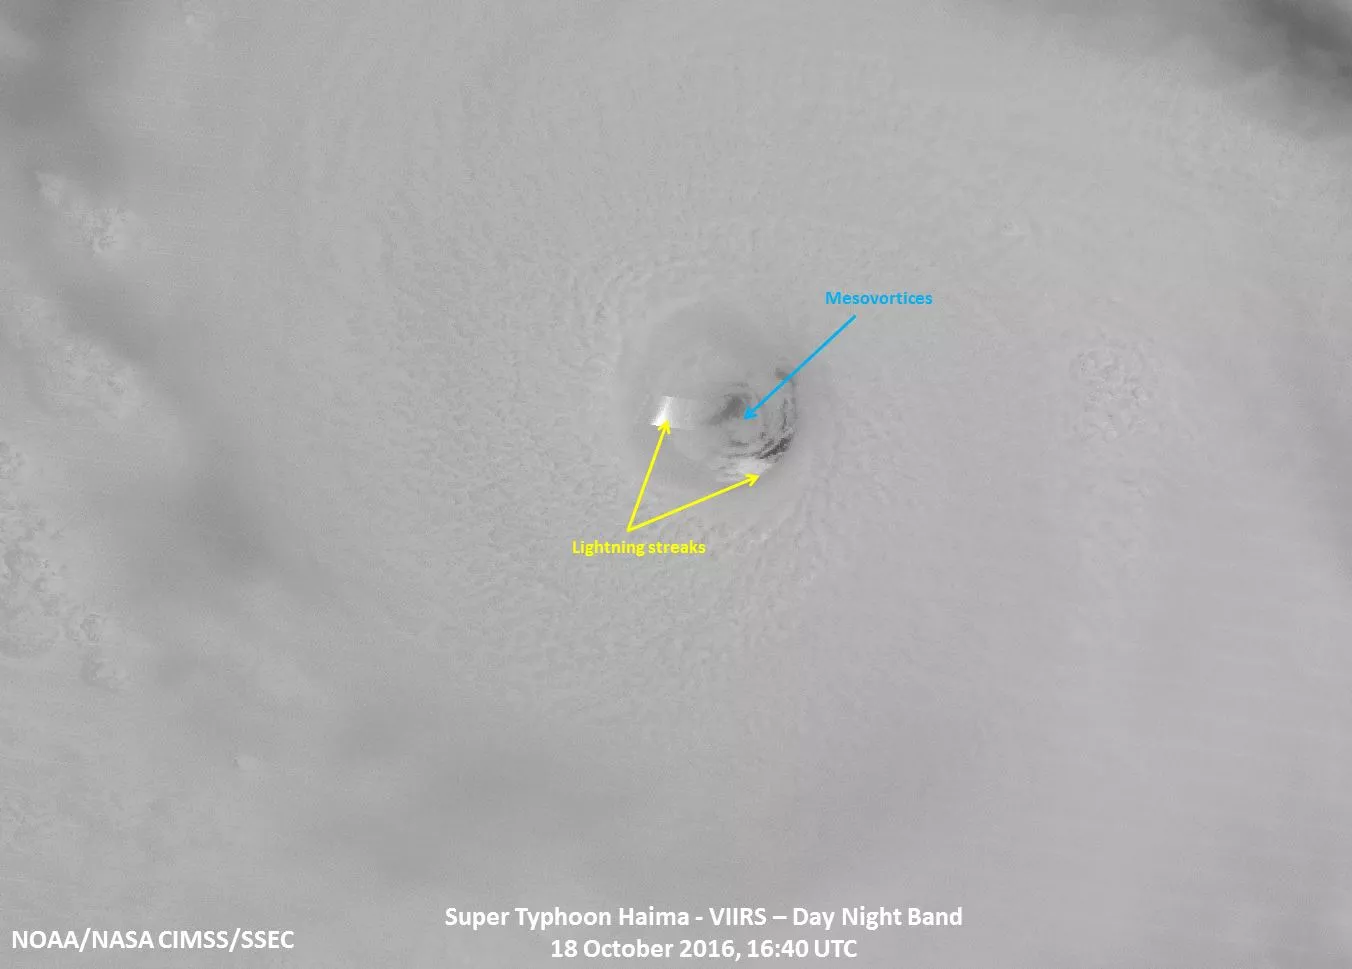 Image of the eye of a typhoon